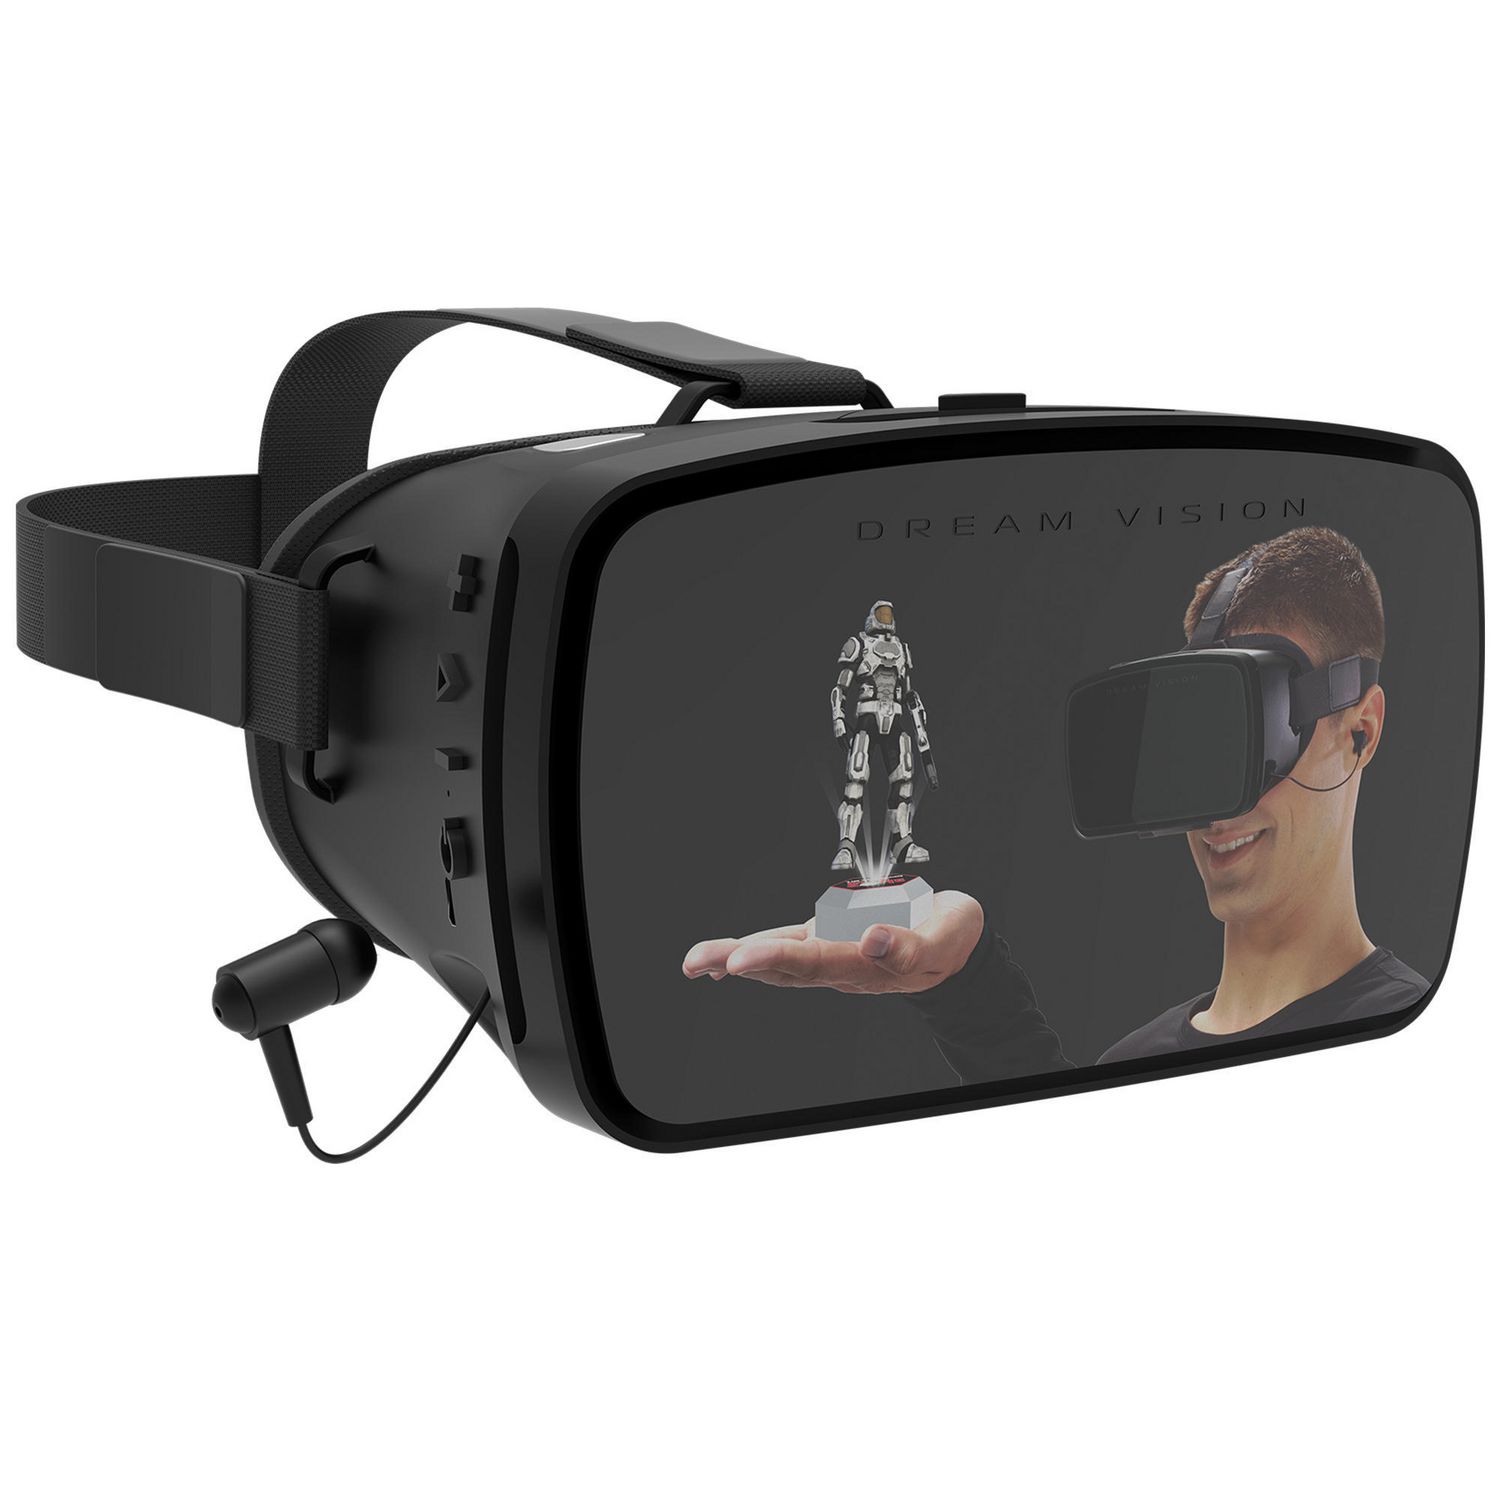 Про vr очки. Tzumi Dream Vision Pro. Vision Pro ВР очки. TFN VR Vision Pro. Dream Vision by Tzumi.